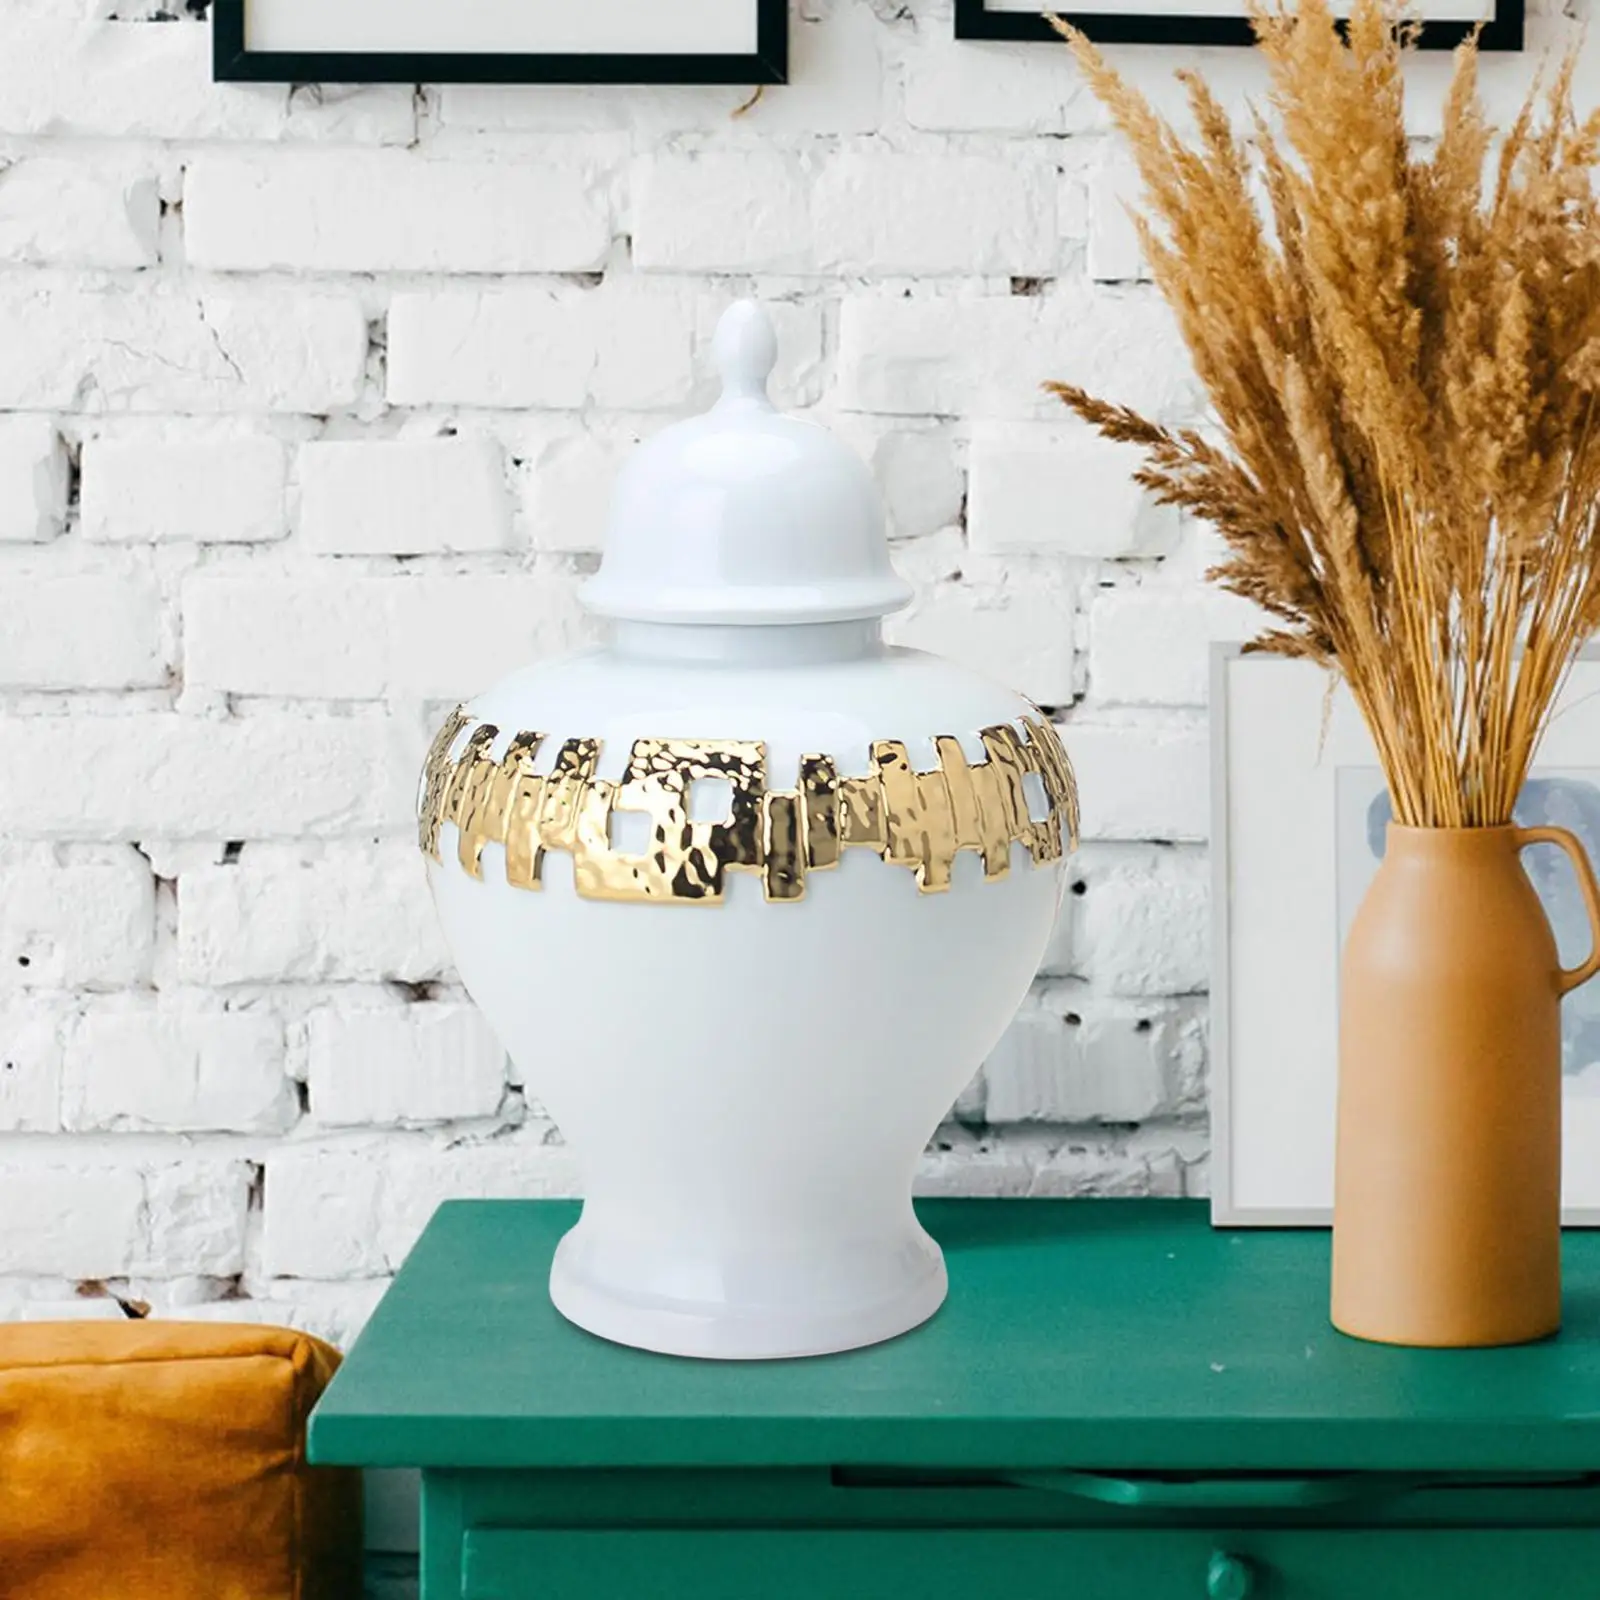 Porcelain Ginger Jars Ceramic Flower Vase Temple Jar with Lid Table Centerpieces